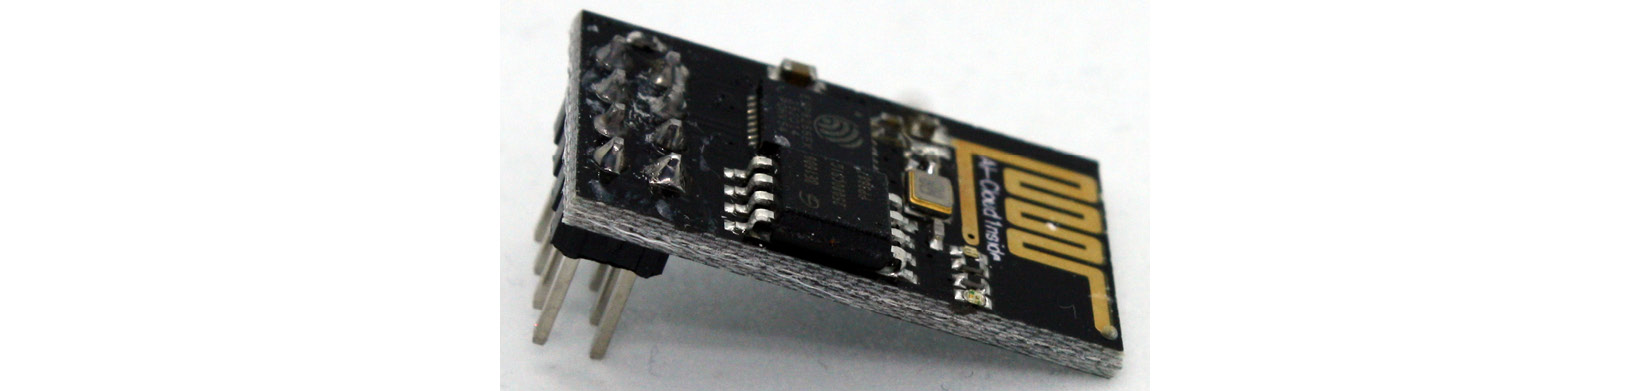 Figure 9.12 – ESP-01 breakout board with an ESP8266 Wi-Fi